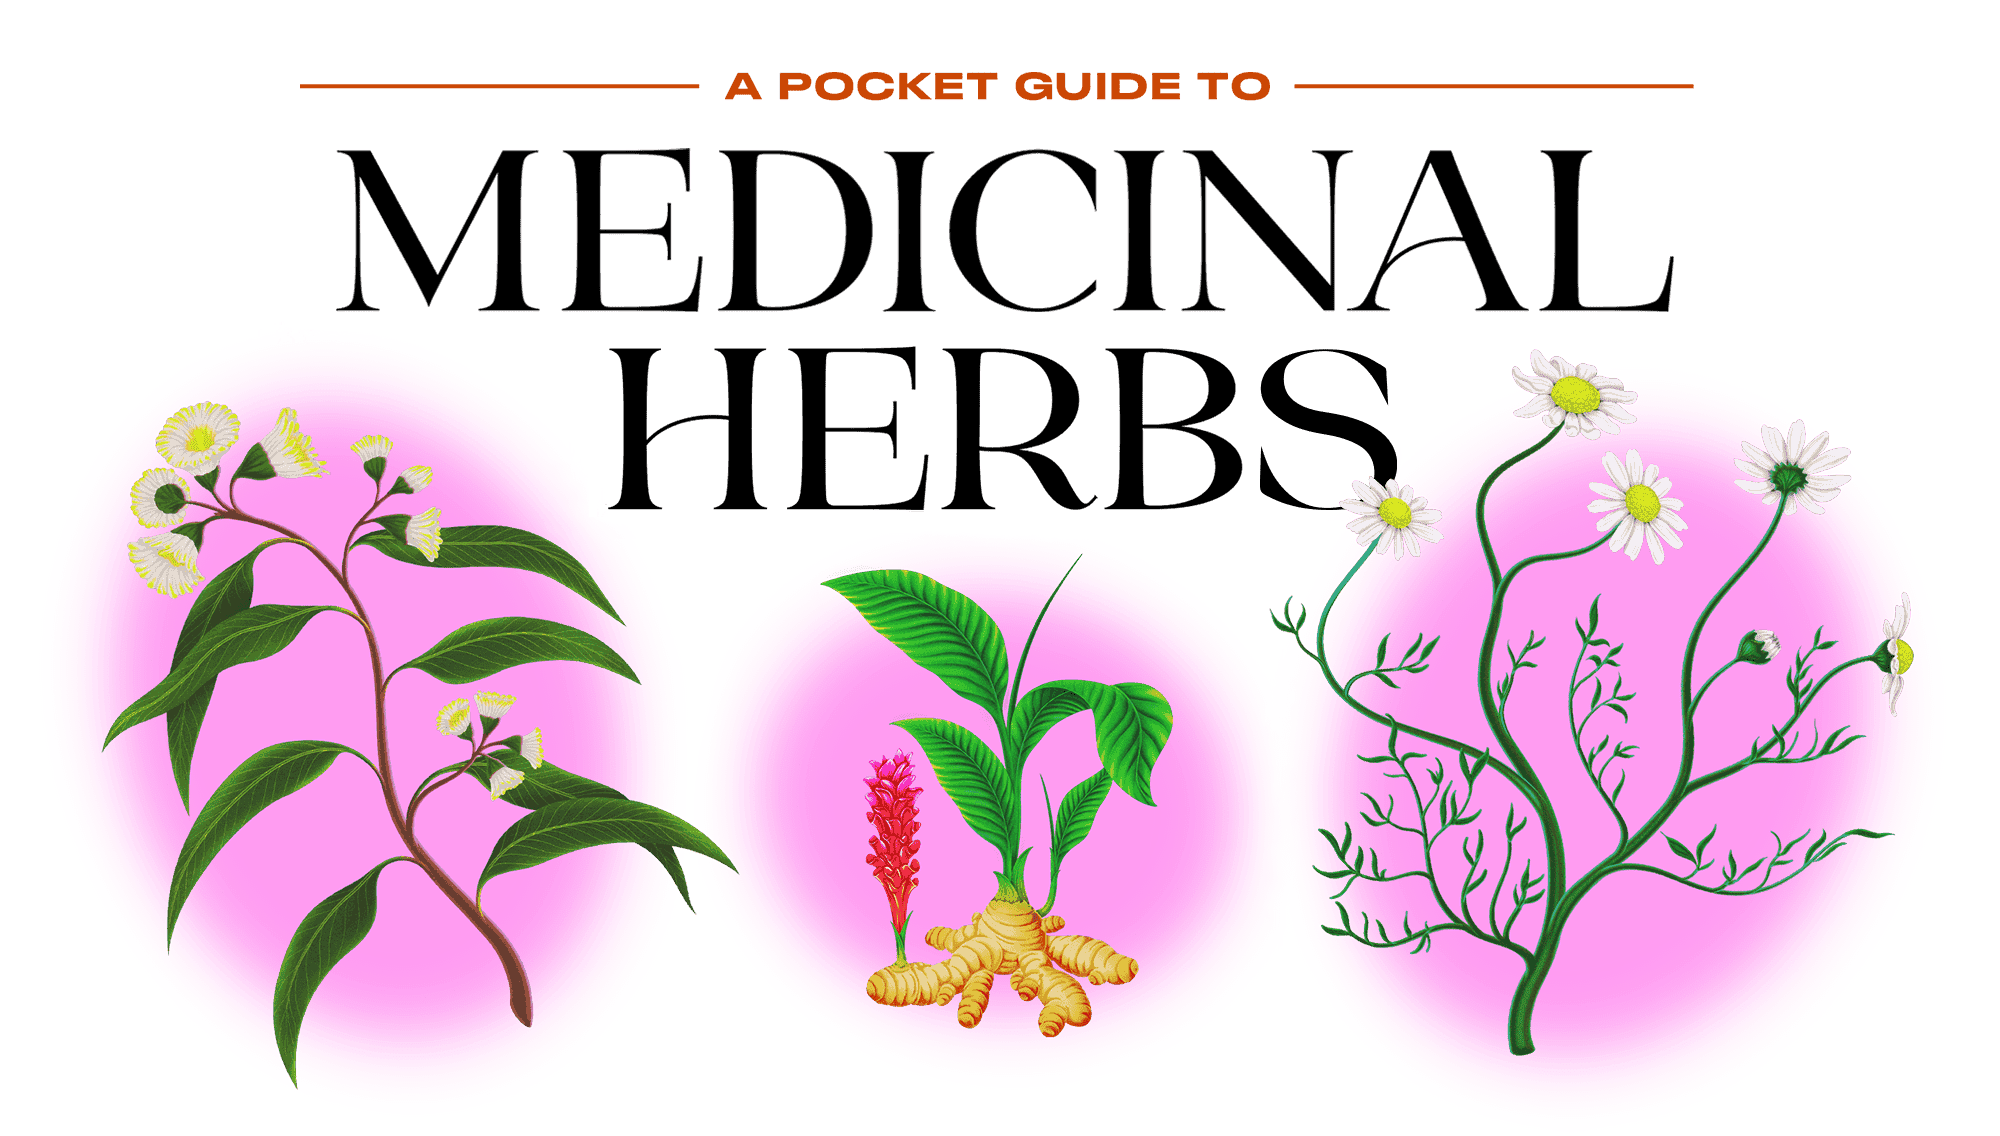 A Pocket Guide to Medicinal Herbs